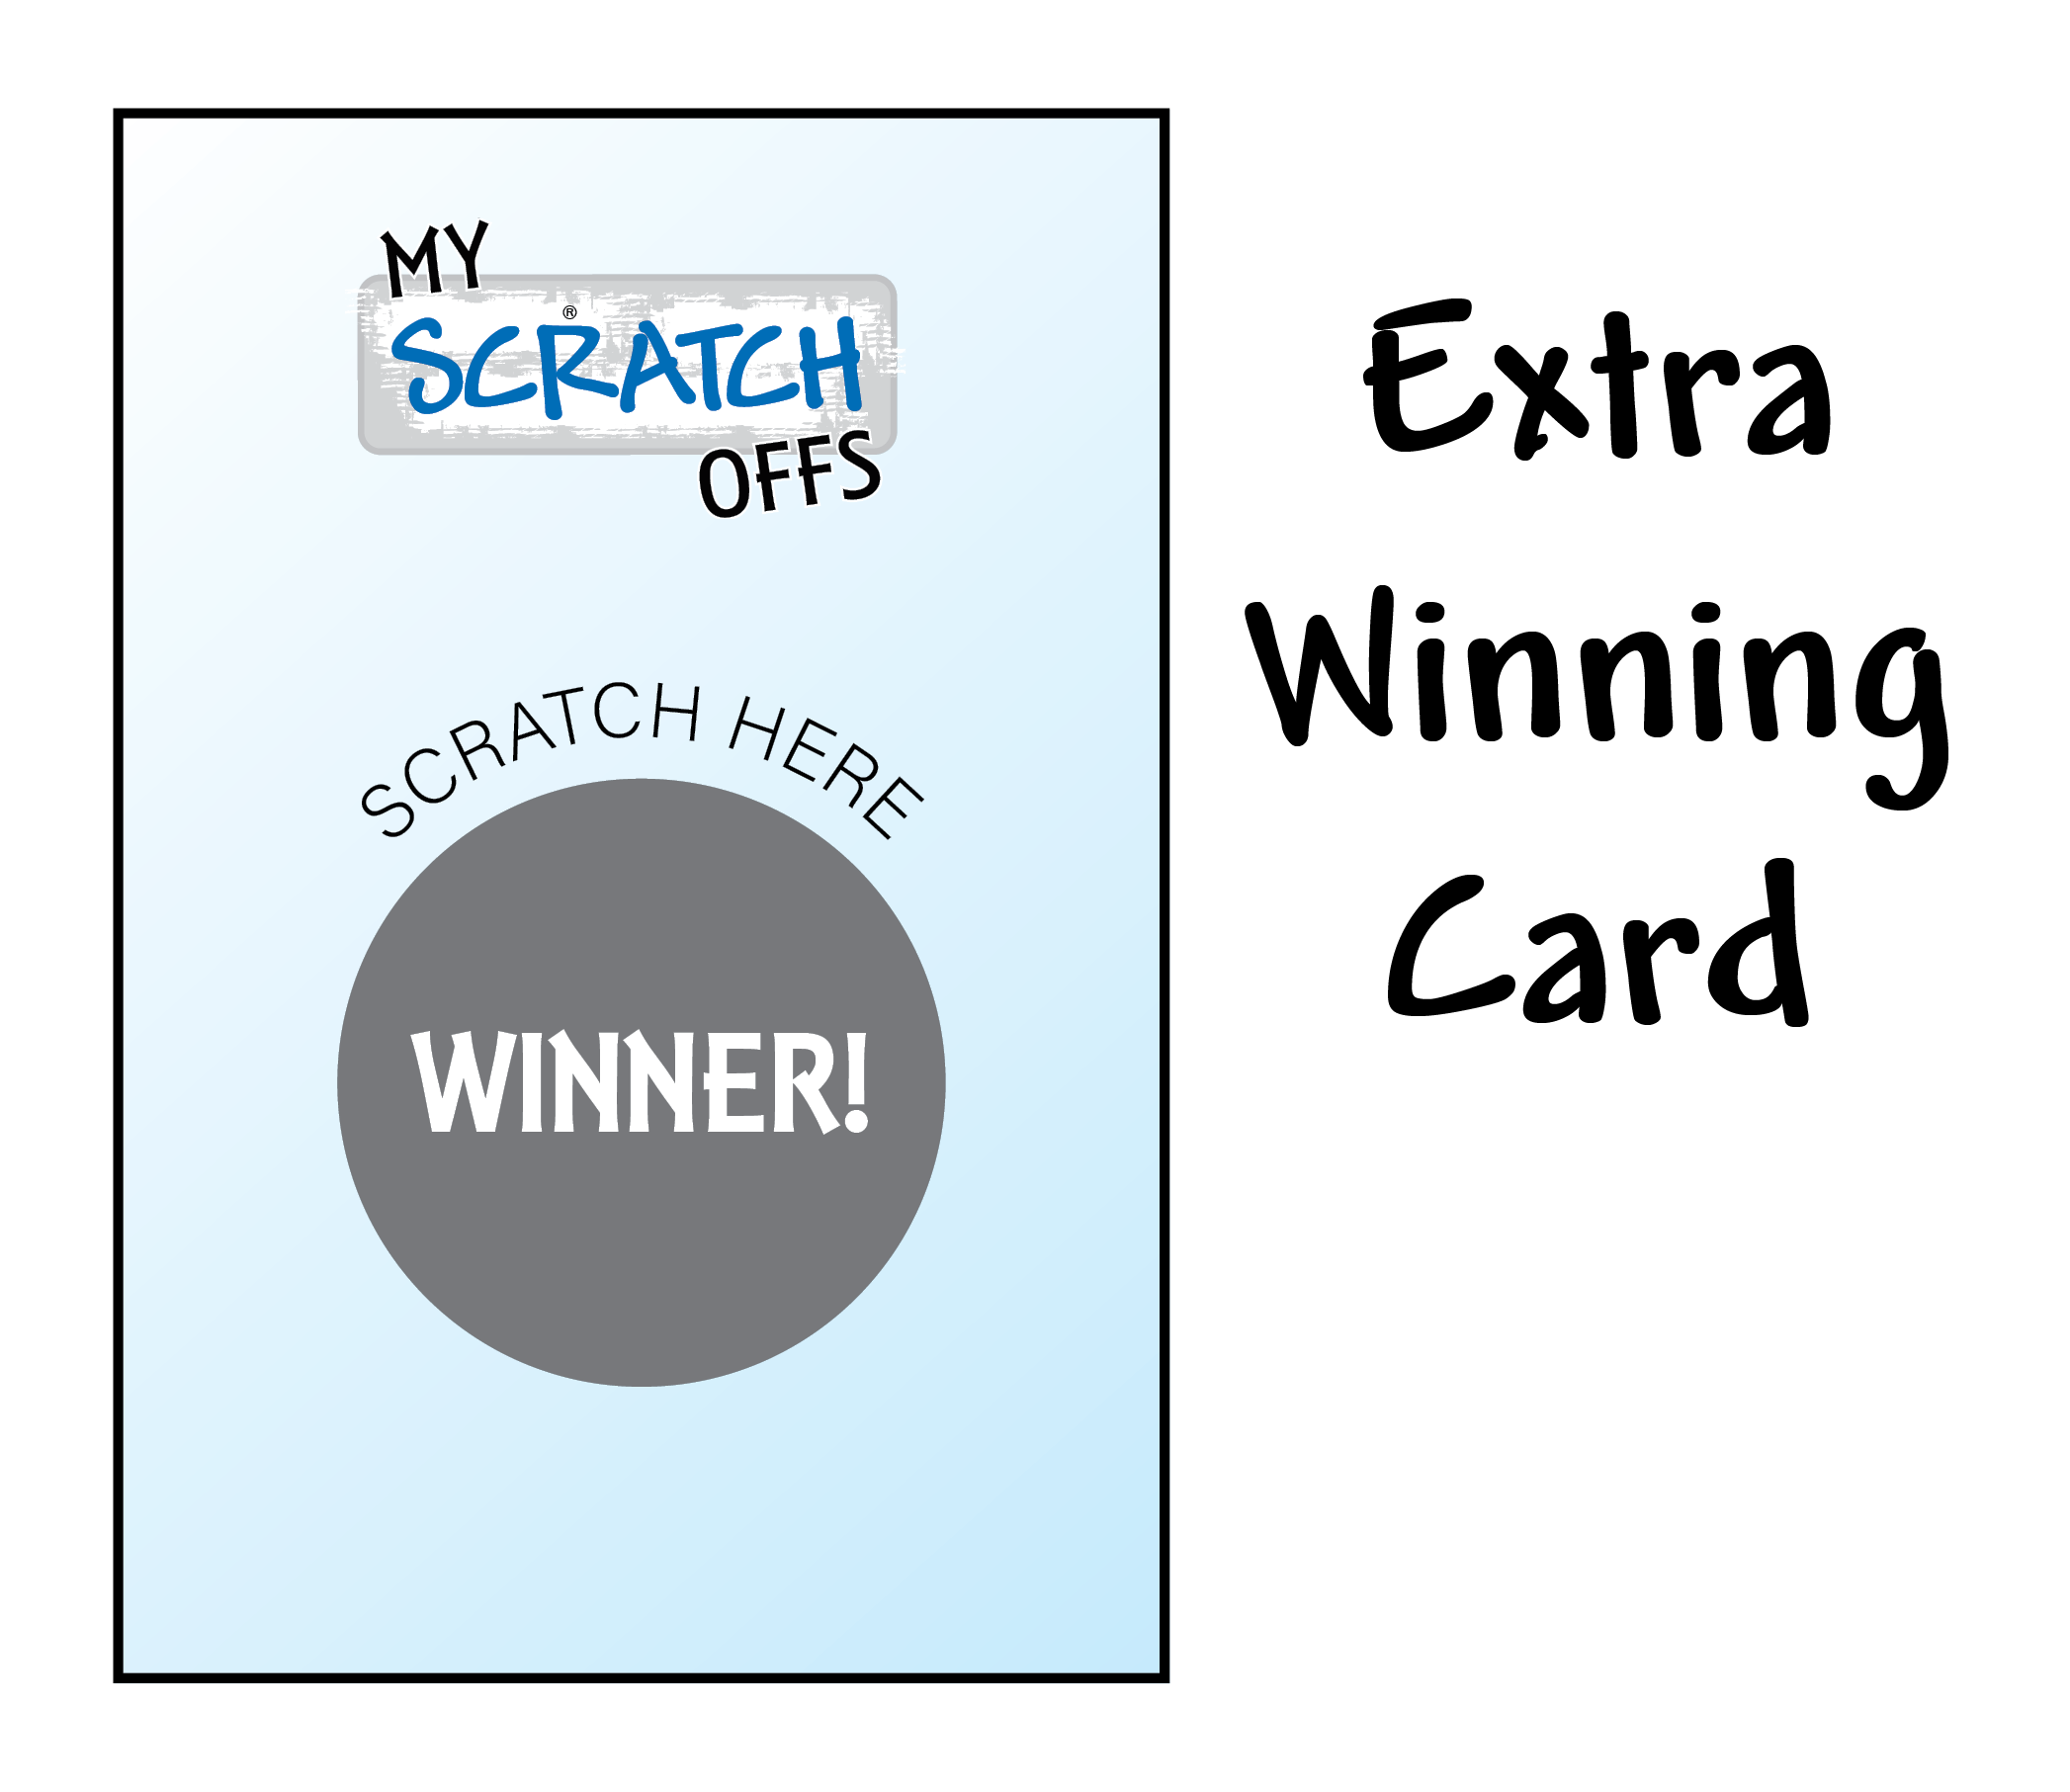 Extra Winning Card - Casino Night - My Scratch Offs